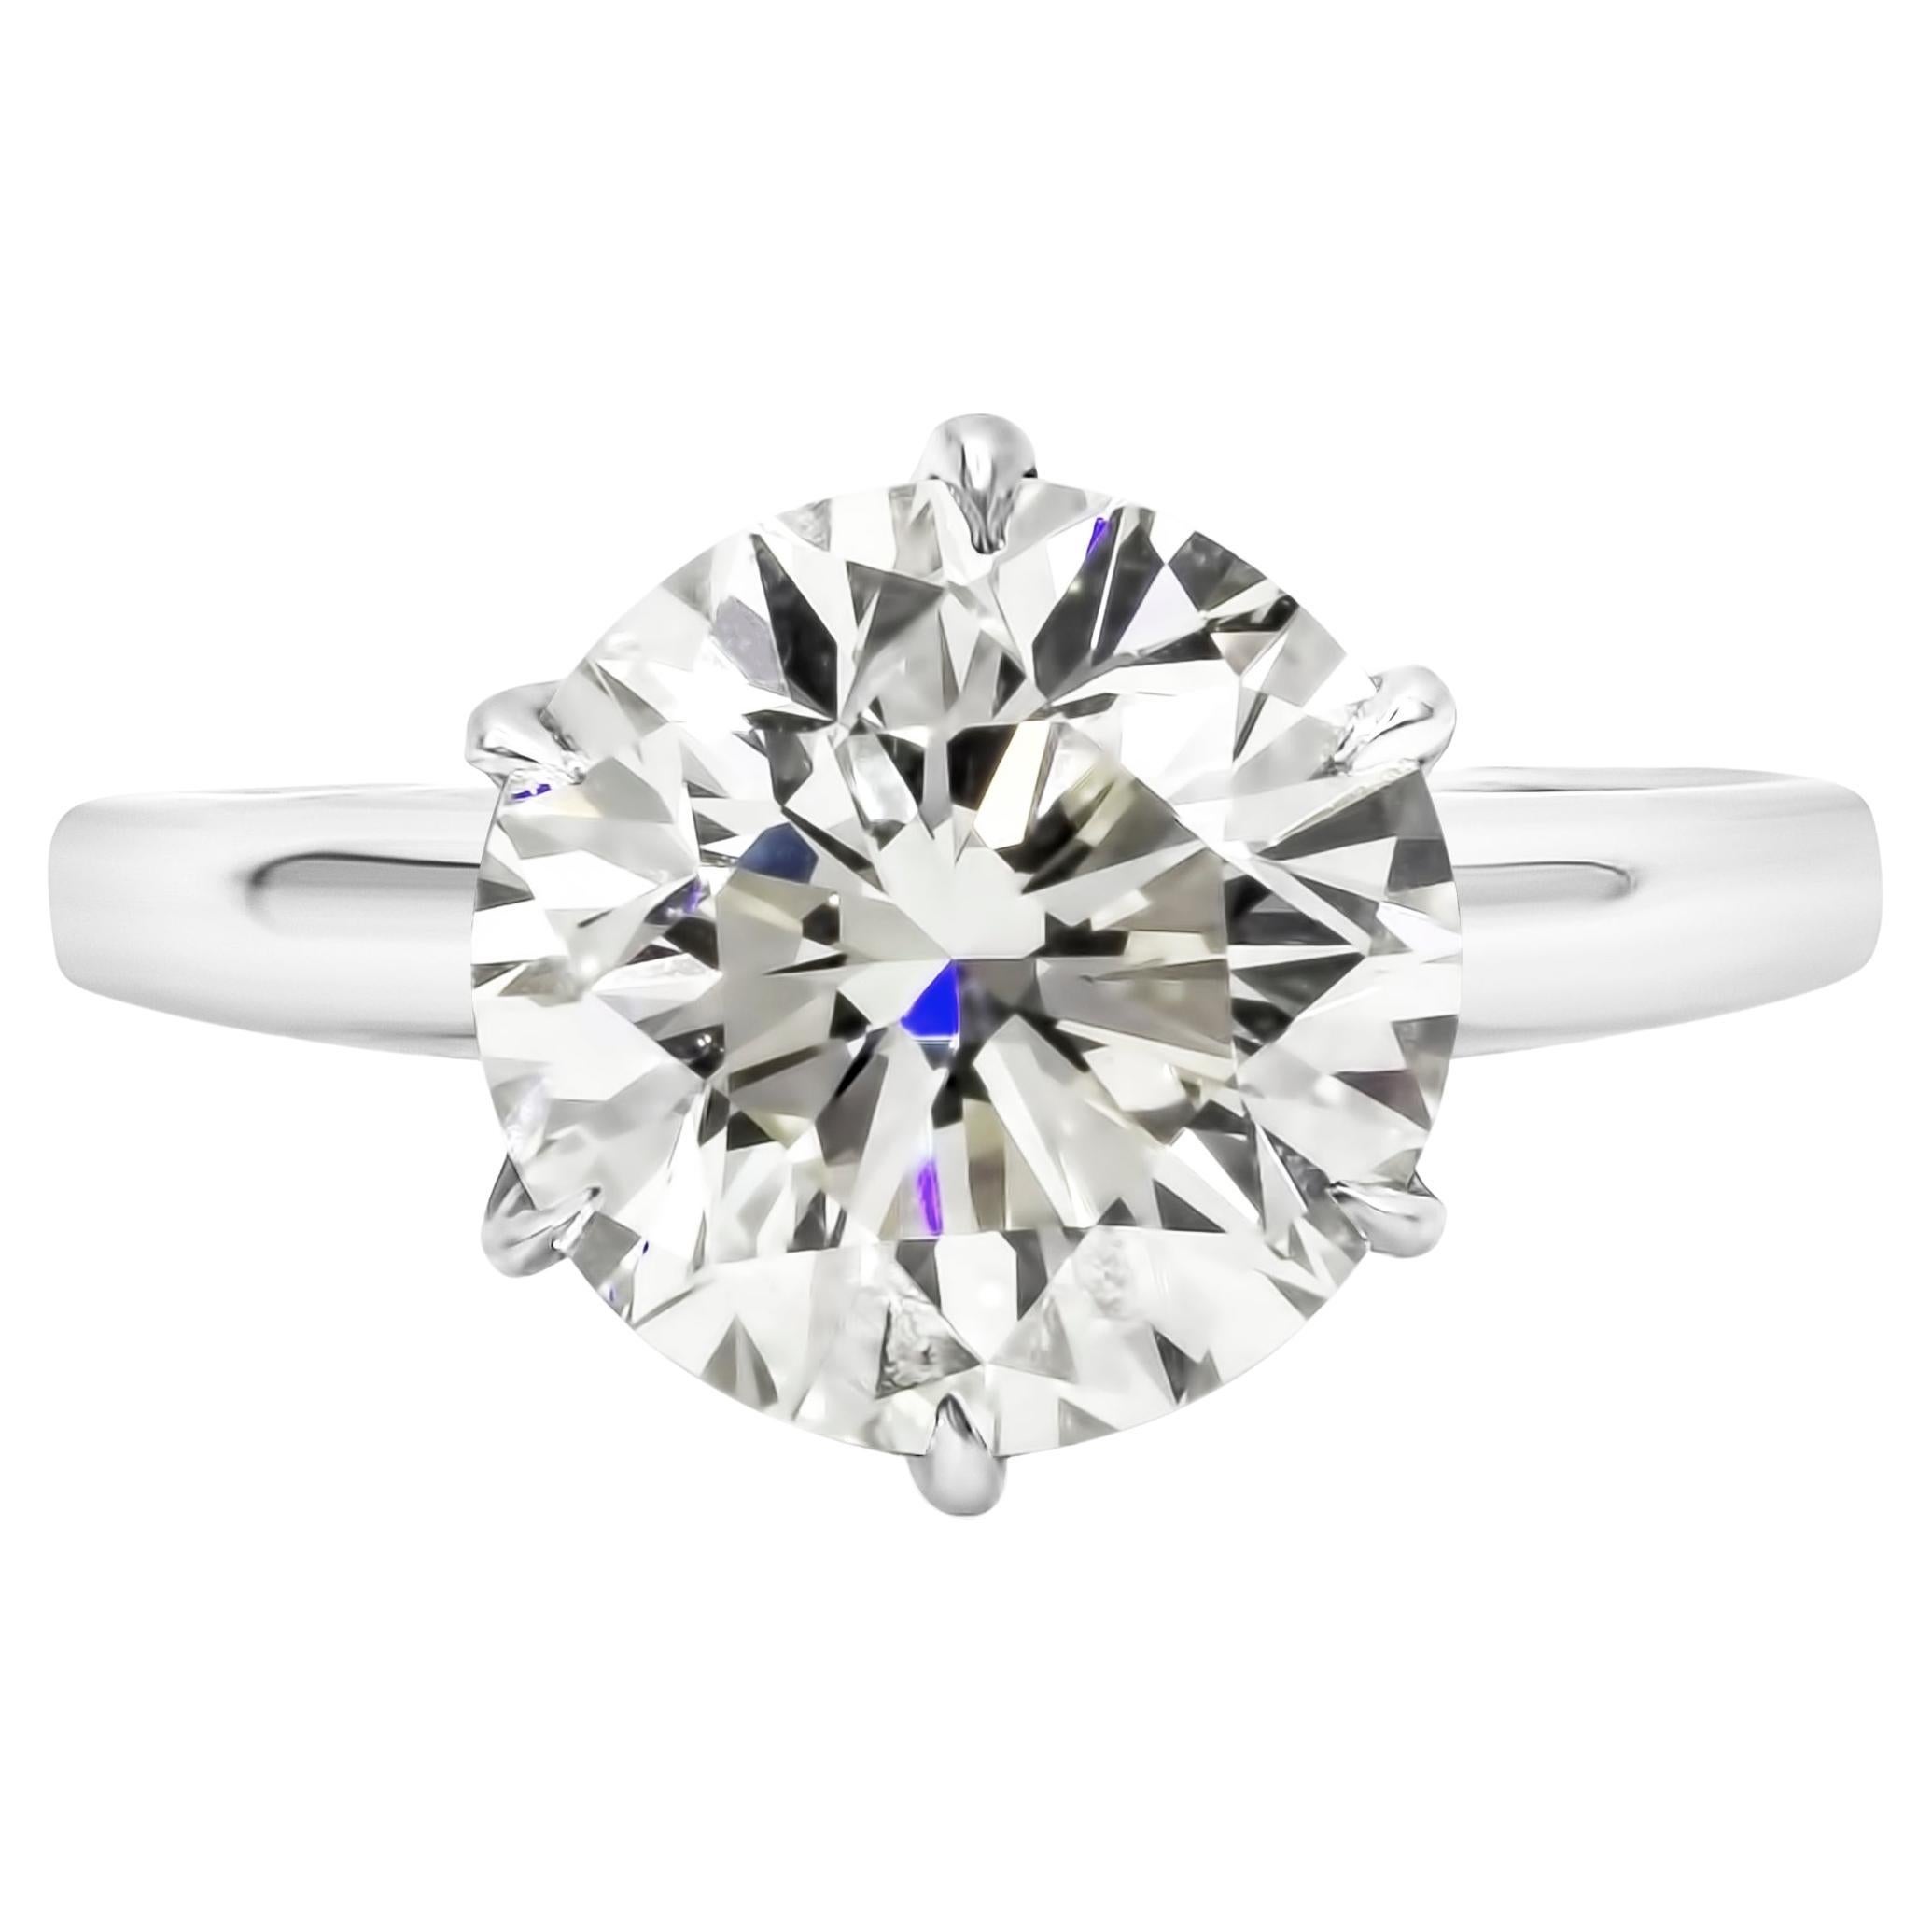 Roman Malakov GIA Certified 4.01 Carat Round Diamond Solitaire Engagement Ring